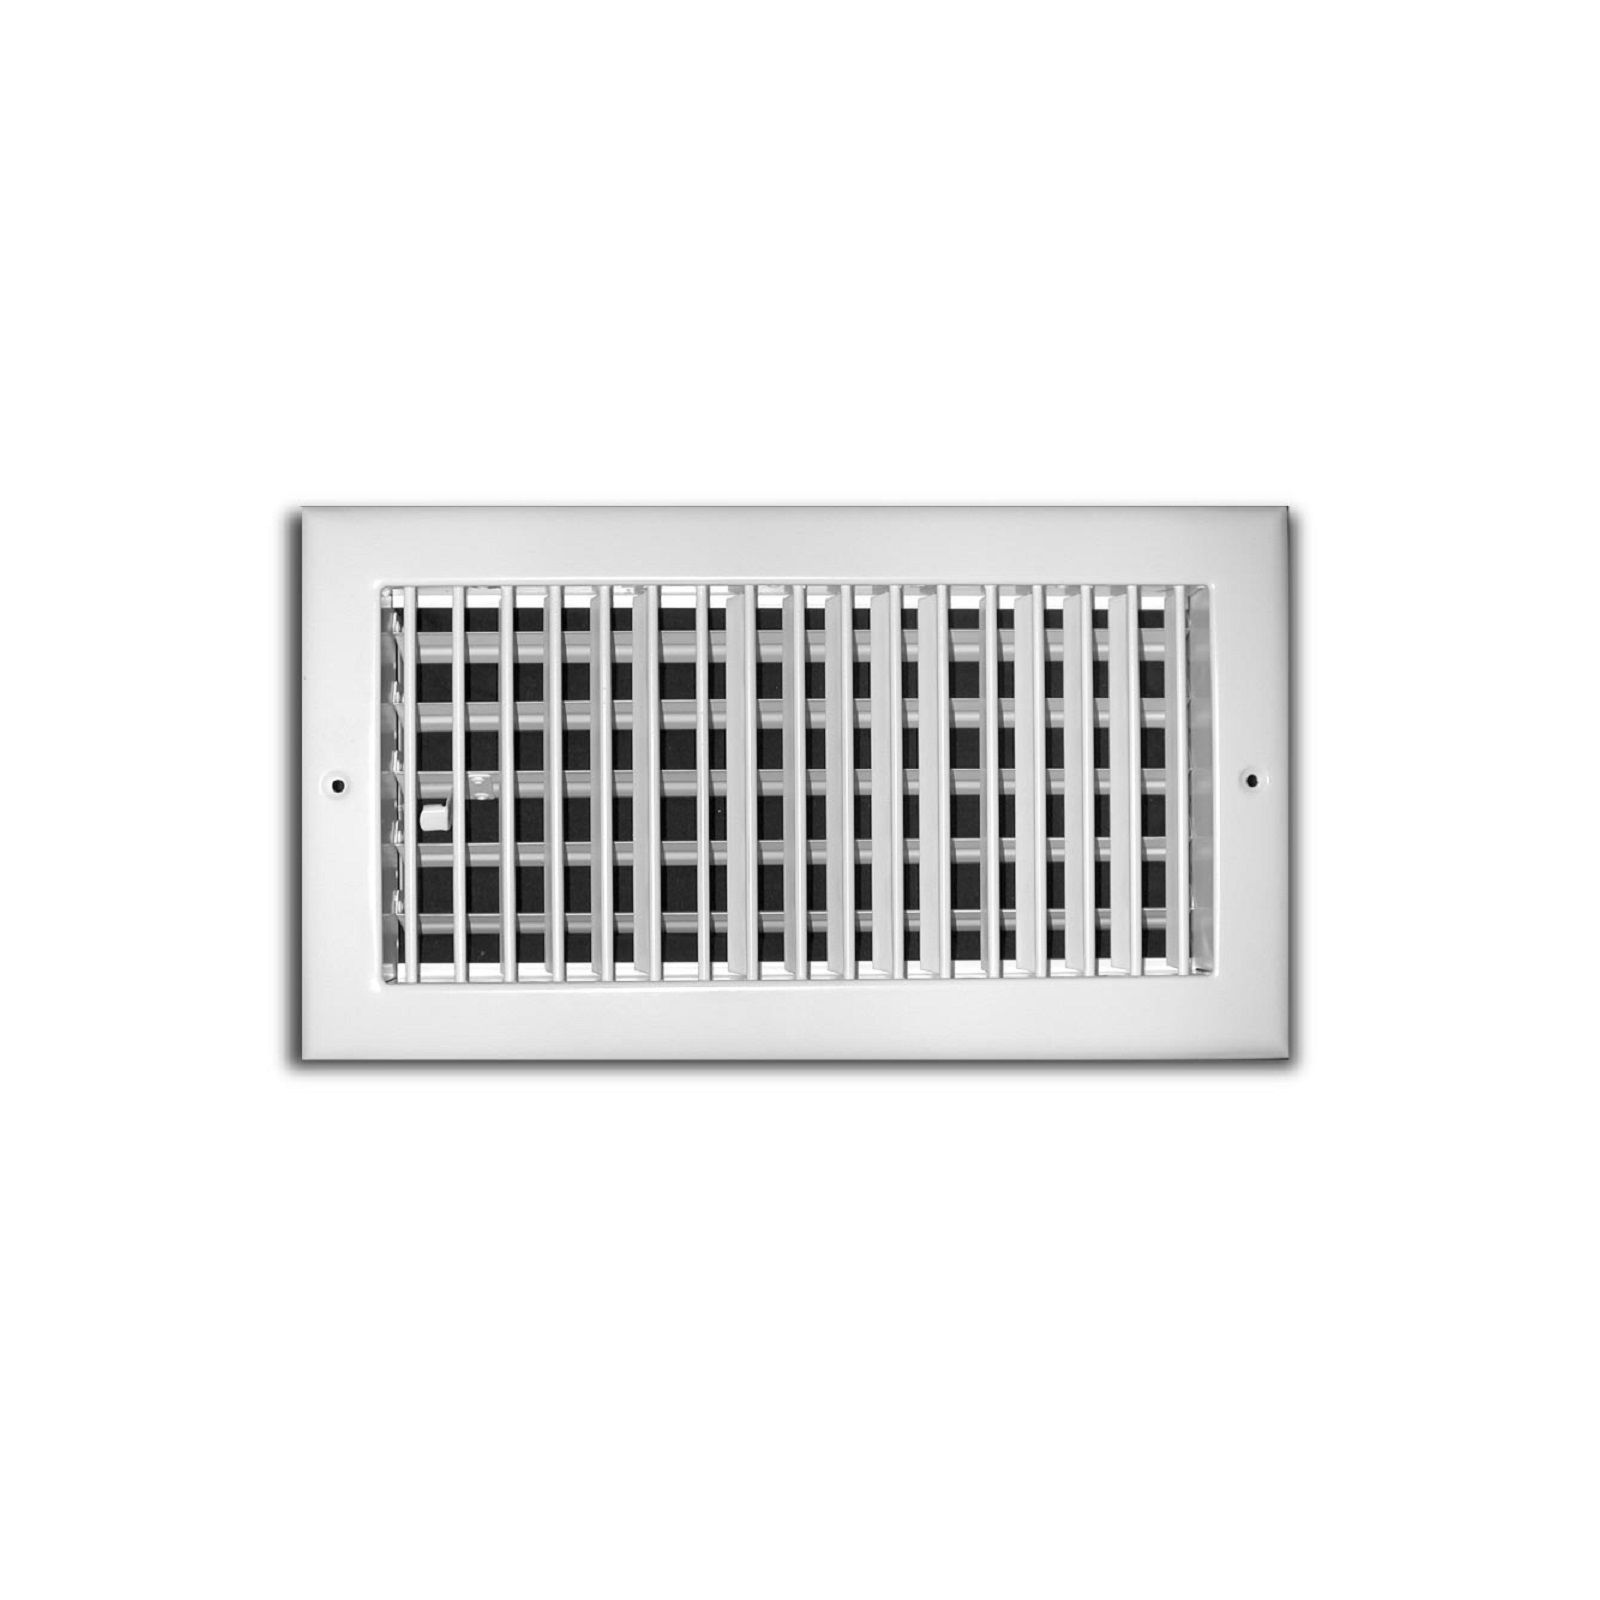 TRUaire 210VM 24X04 - Steel Adjustable 1-Way Wall/Ceiling Register With Multi Shutter Damper, White, 24" X 04"